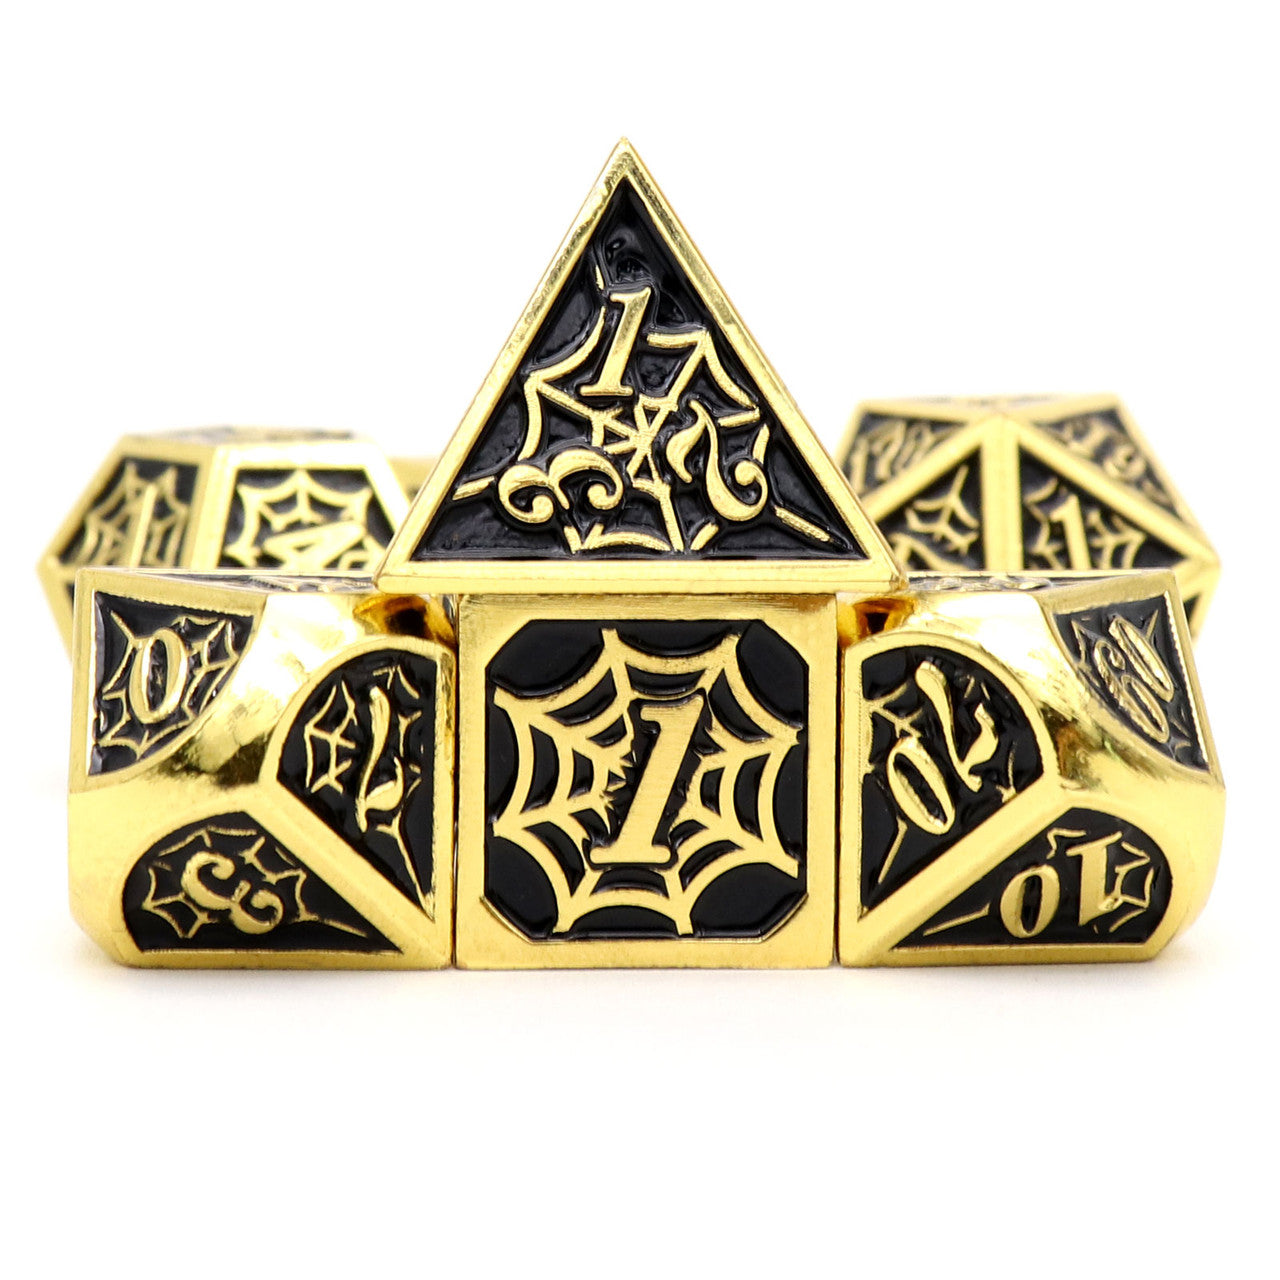 gold black metal dice, gold metal dice, the net dice, net dice, spider dice, black dice, haxtec dice